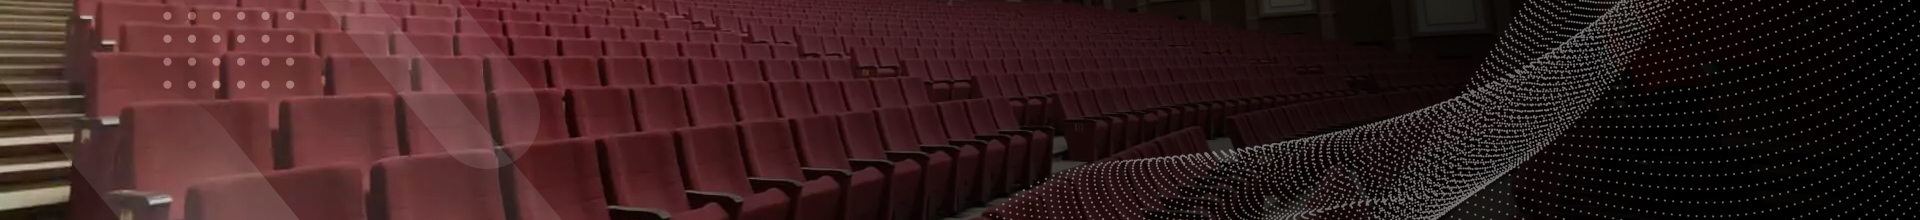 Simko Seating - Conference / Auditorium Seats